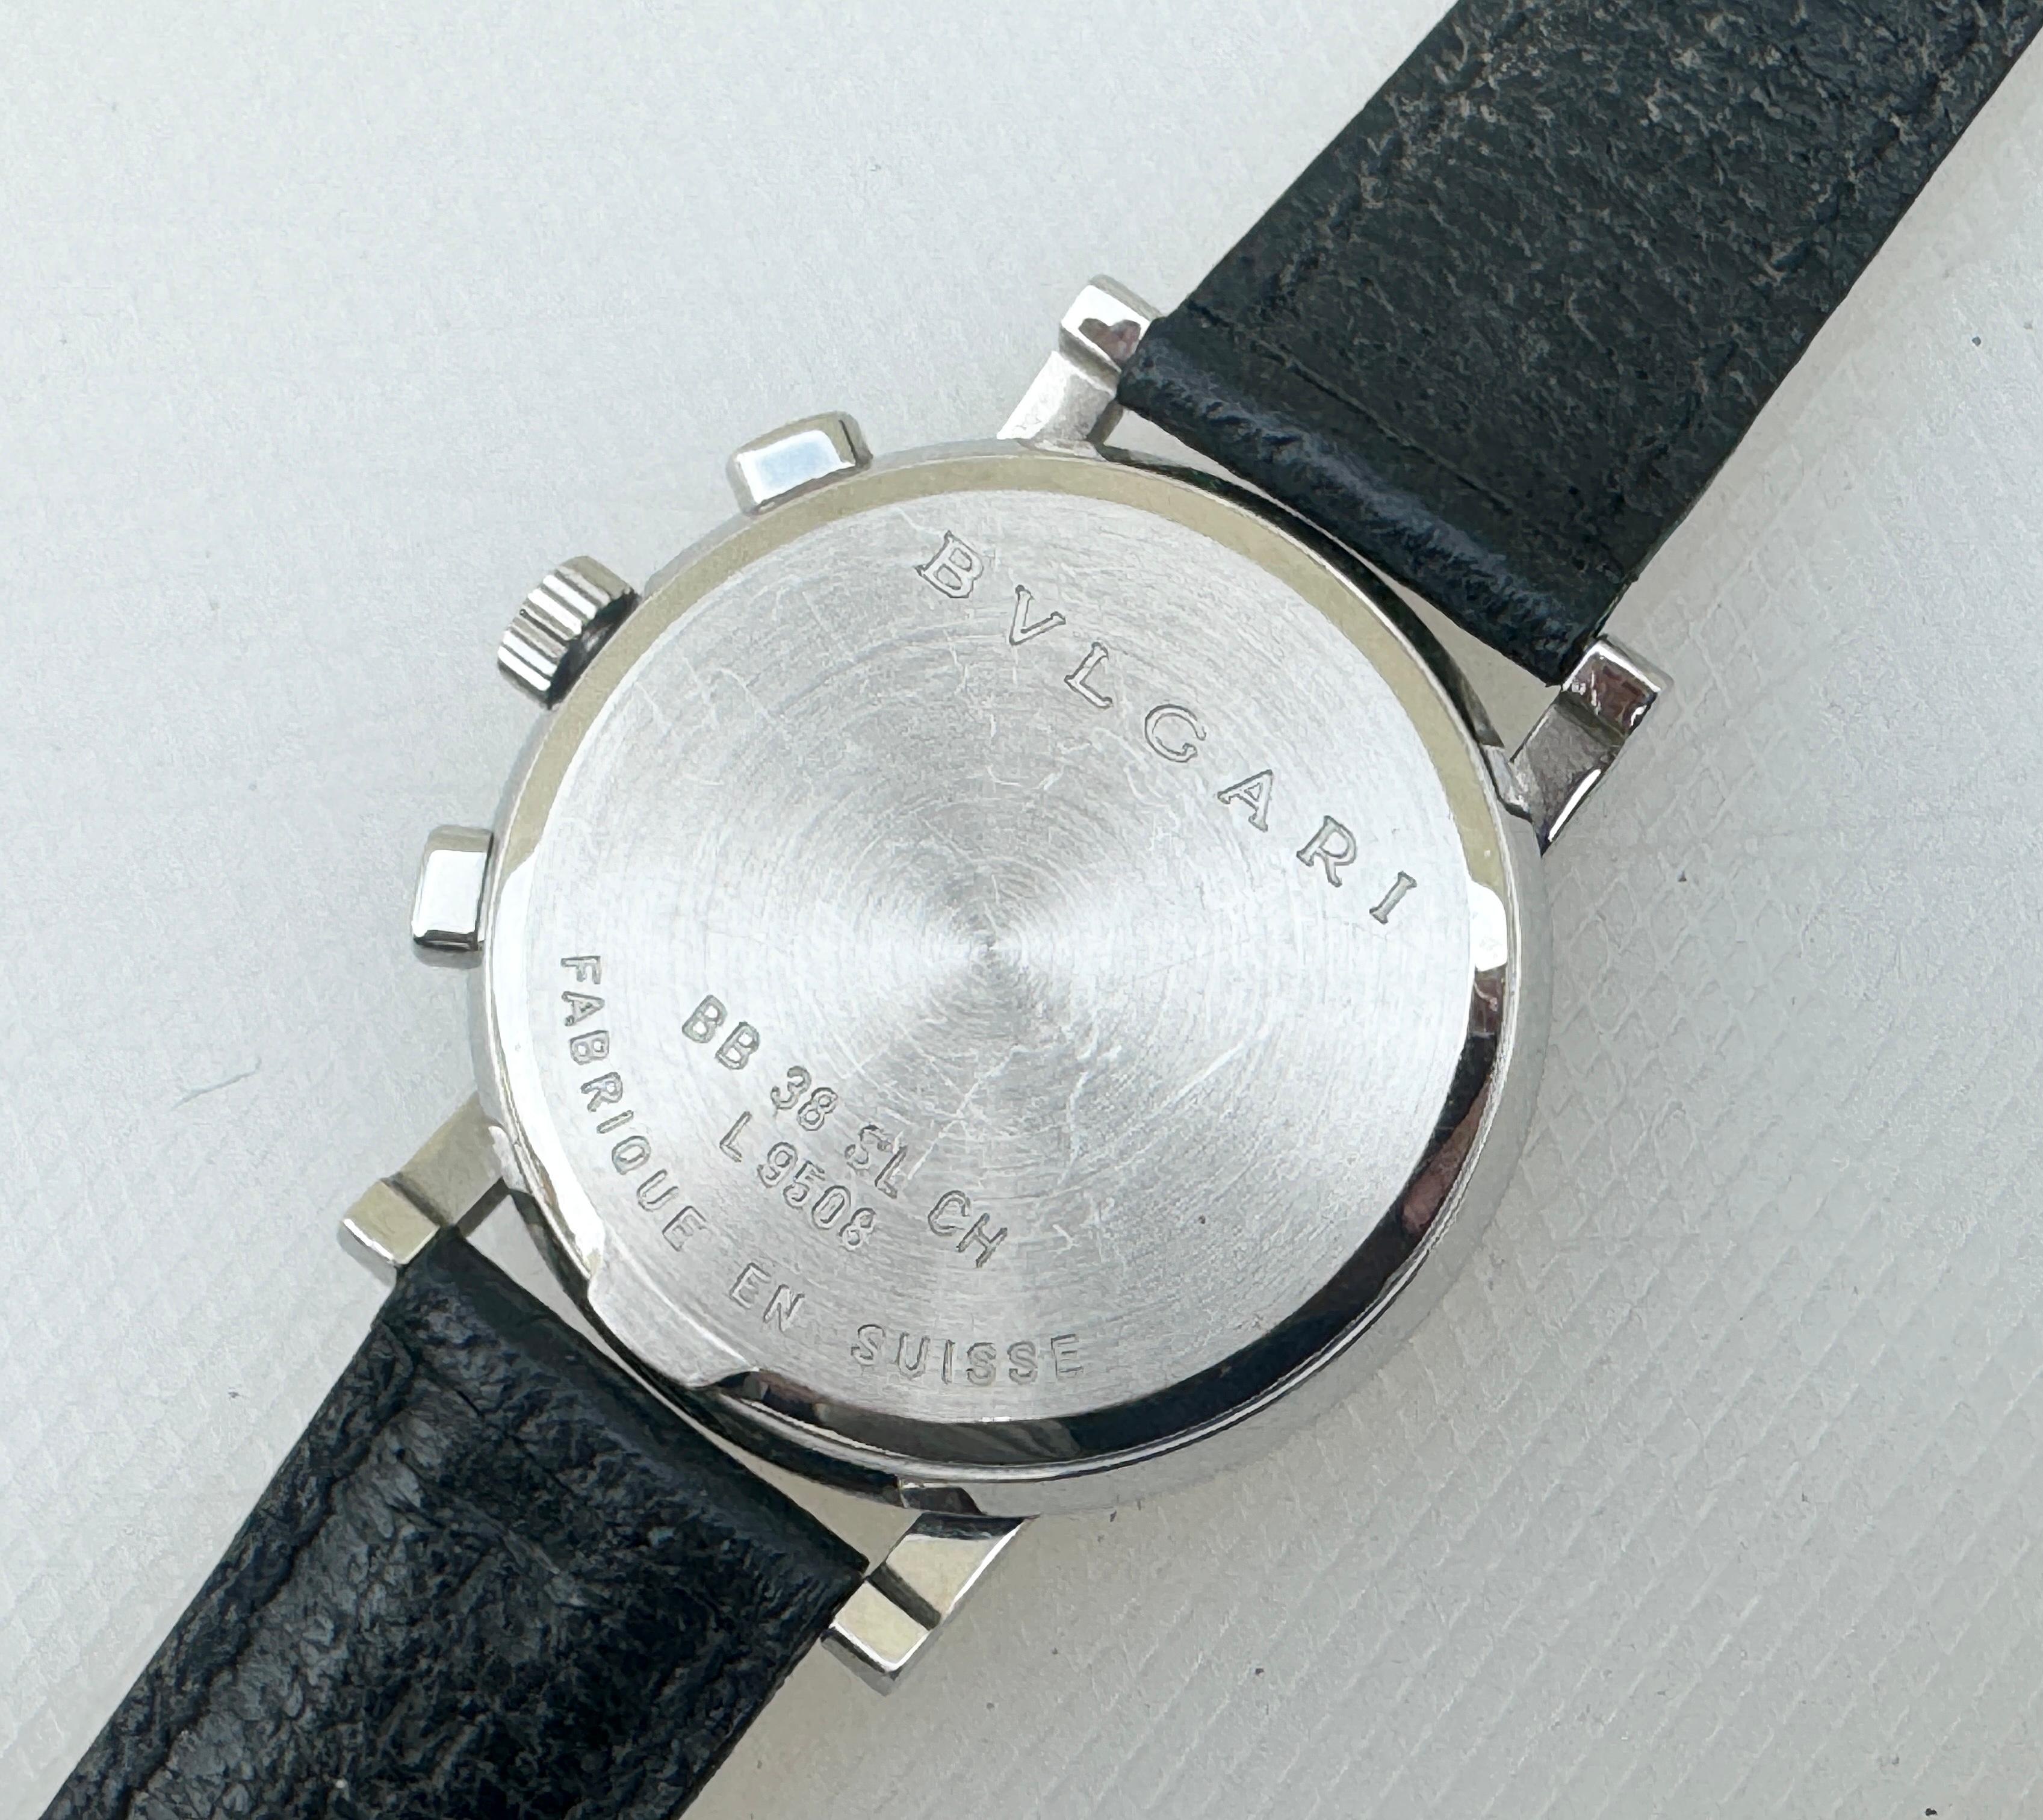 Bulgari Diagono Bvlgari Chronograph Automatic Watch For Sale 8